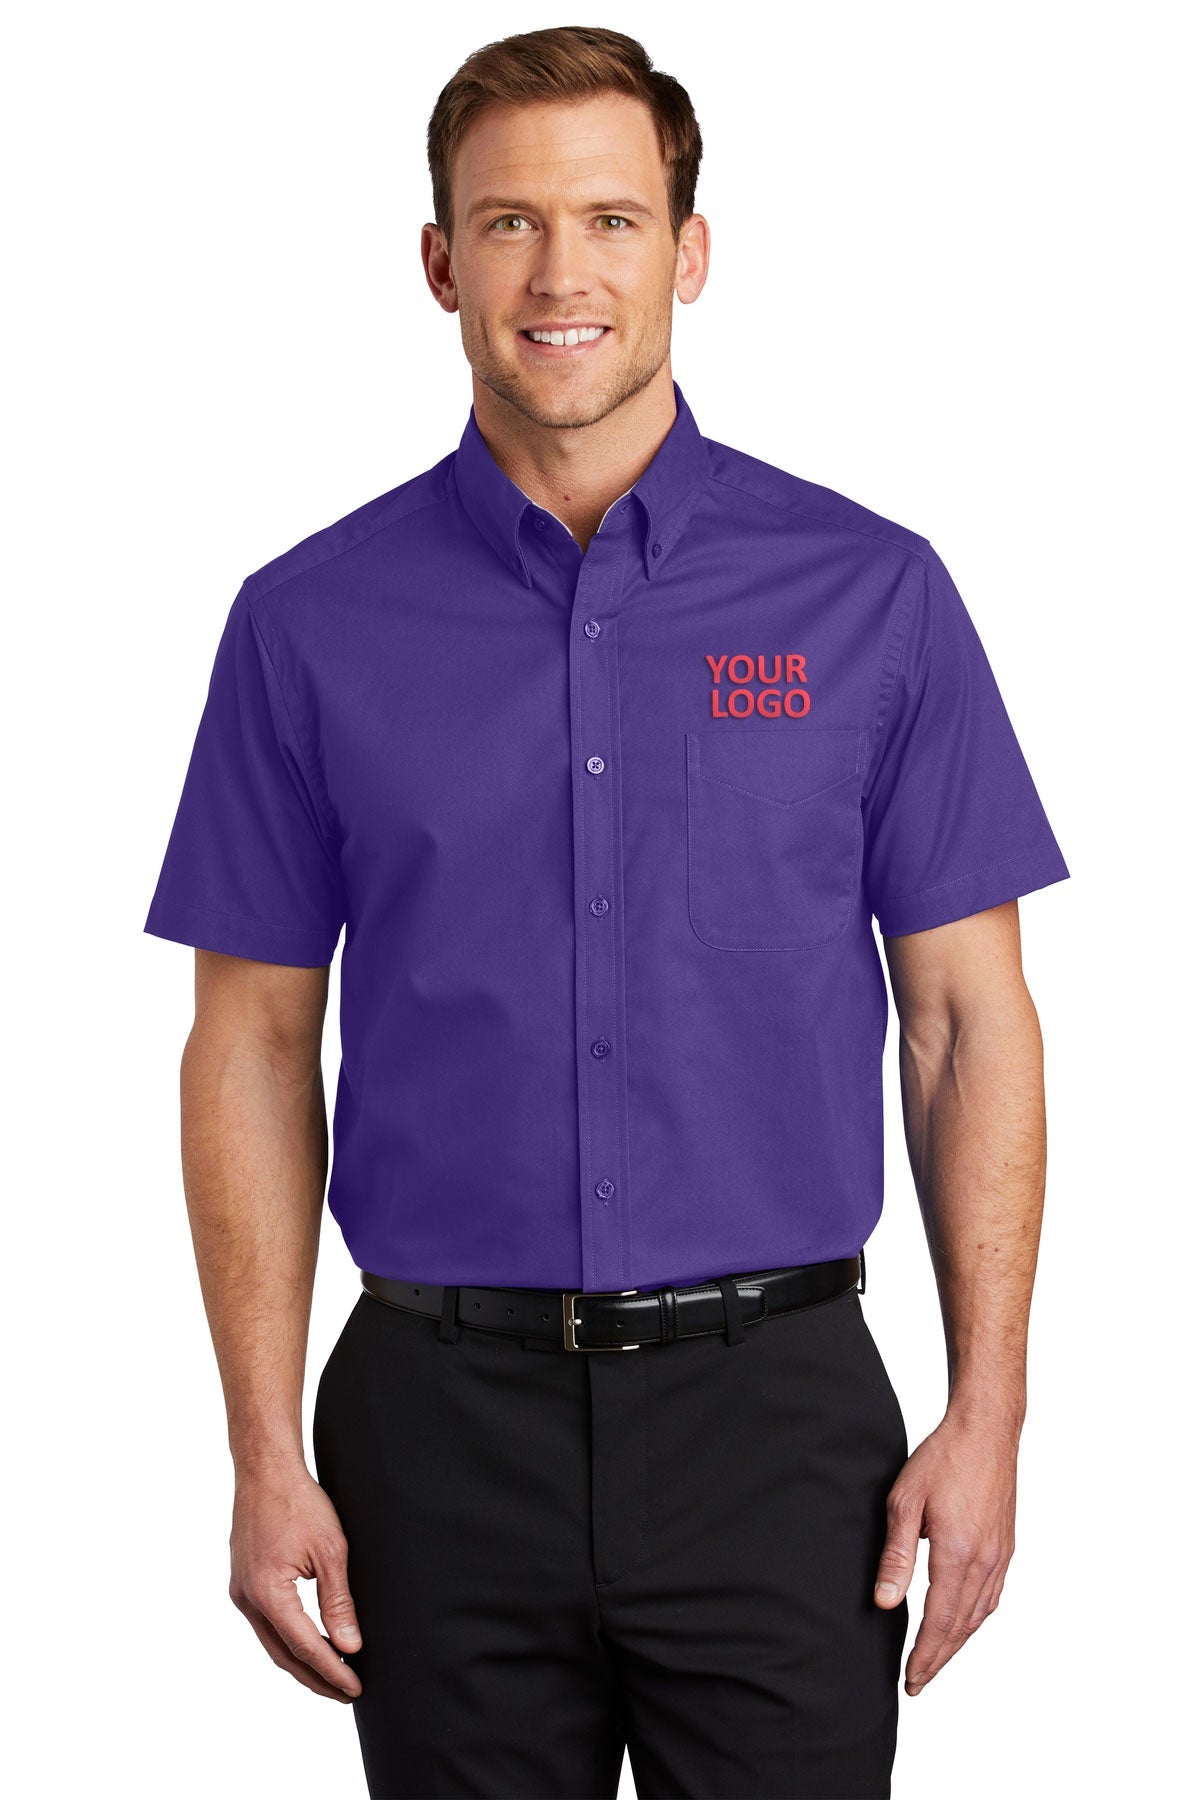 Port Authority Purple/Light Stone S508 company logo shirts